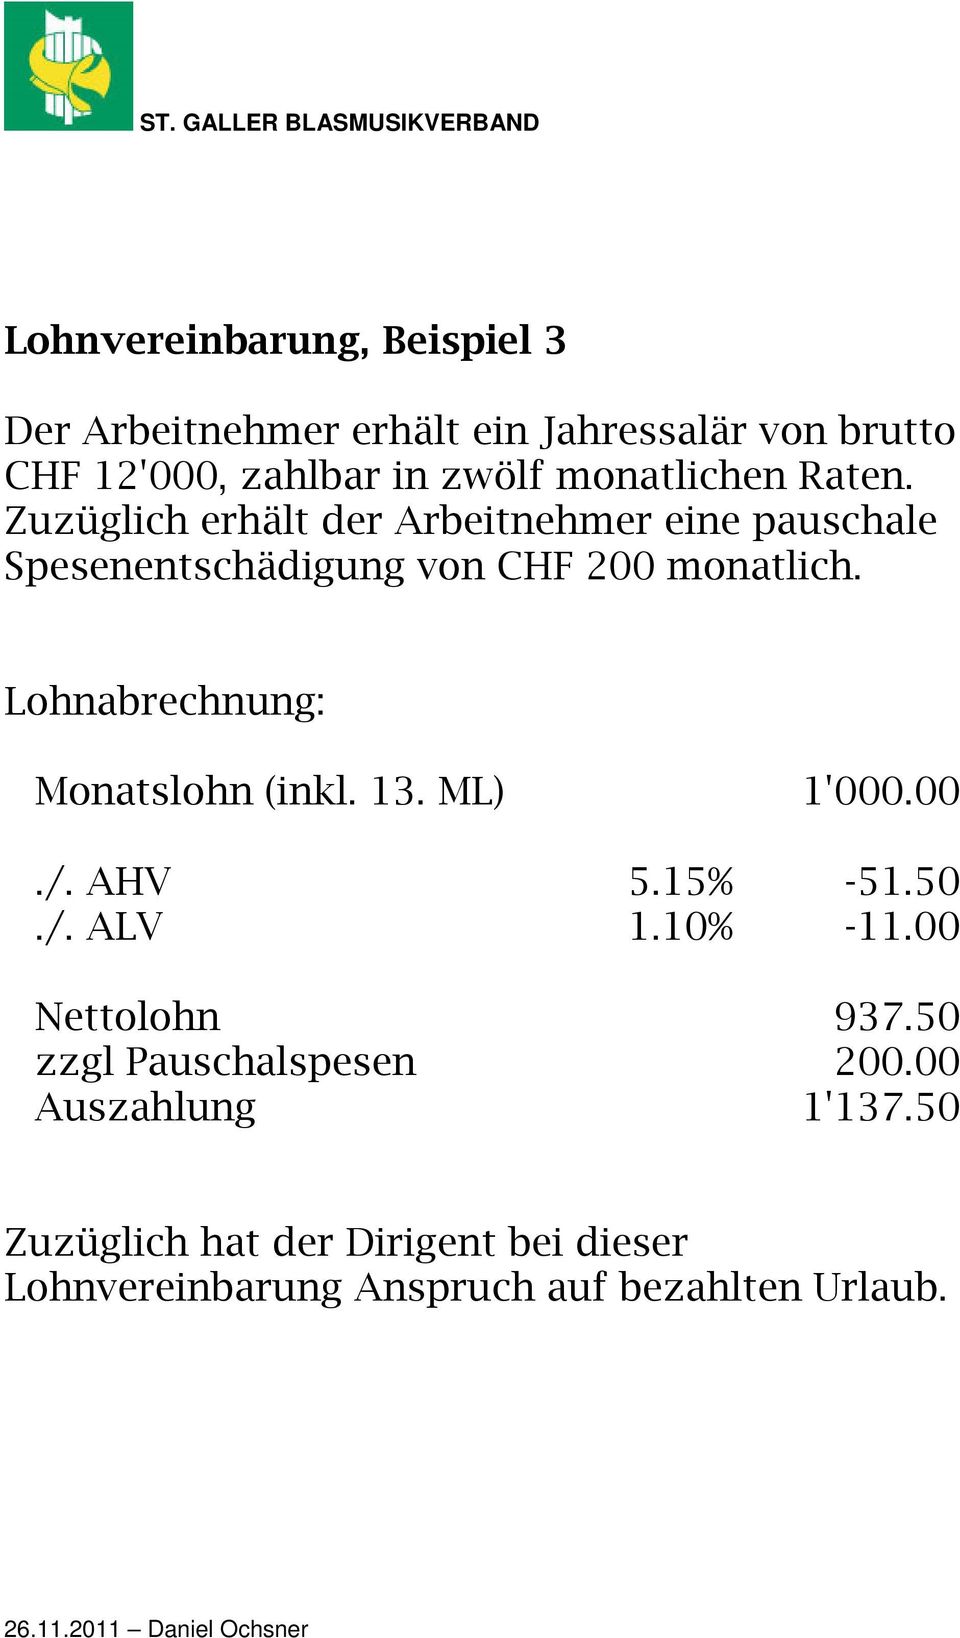 Lohnabrechnung: Monatslohn (inkl. 13. ML) 1'000.00./. AHV 5.15% -51.50./. ALV 1.10% -11.00 Nettolohn 937.